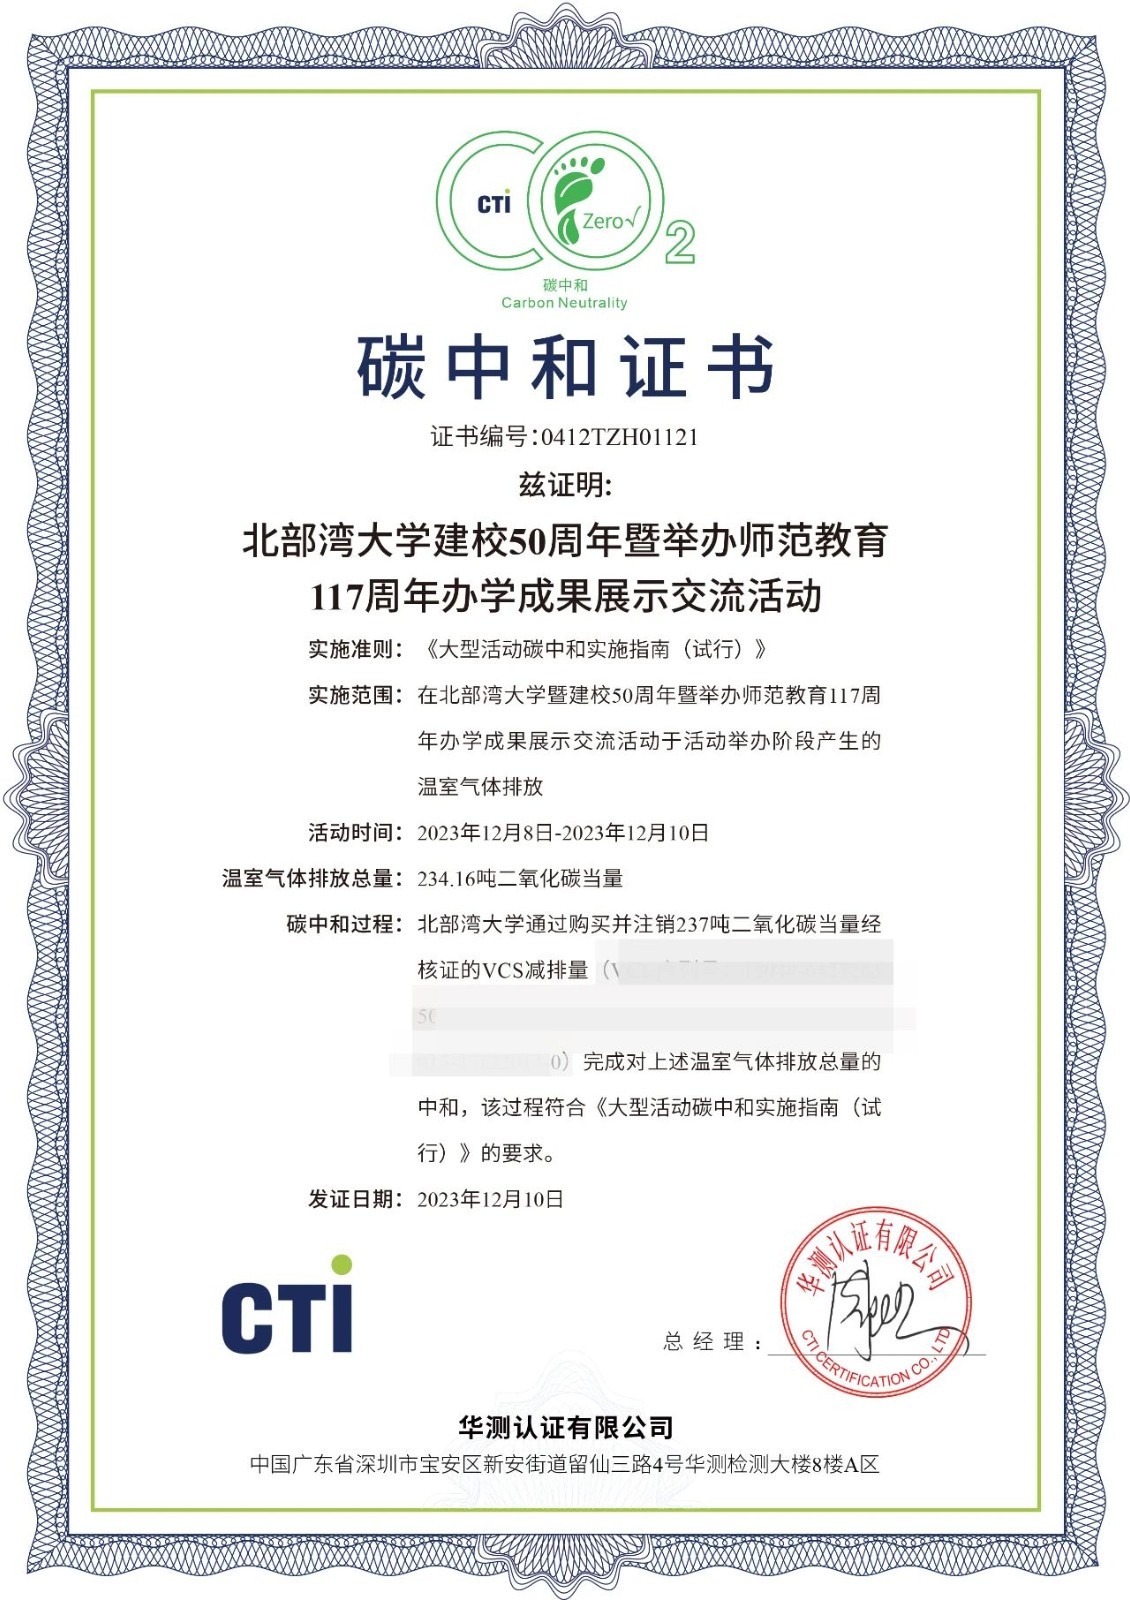 CTI华测认证颁发国内首个高校碳中和证书.jpg